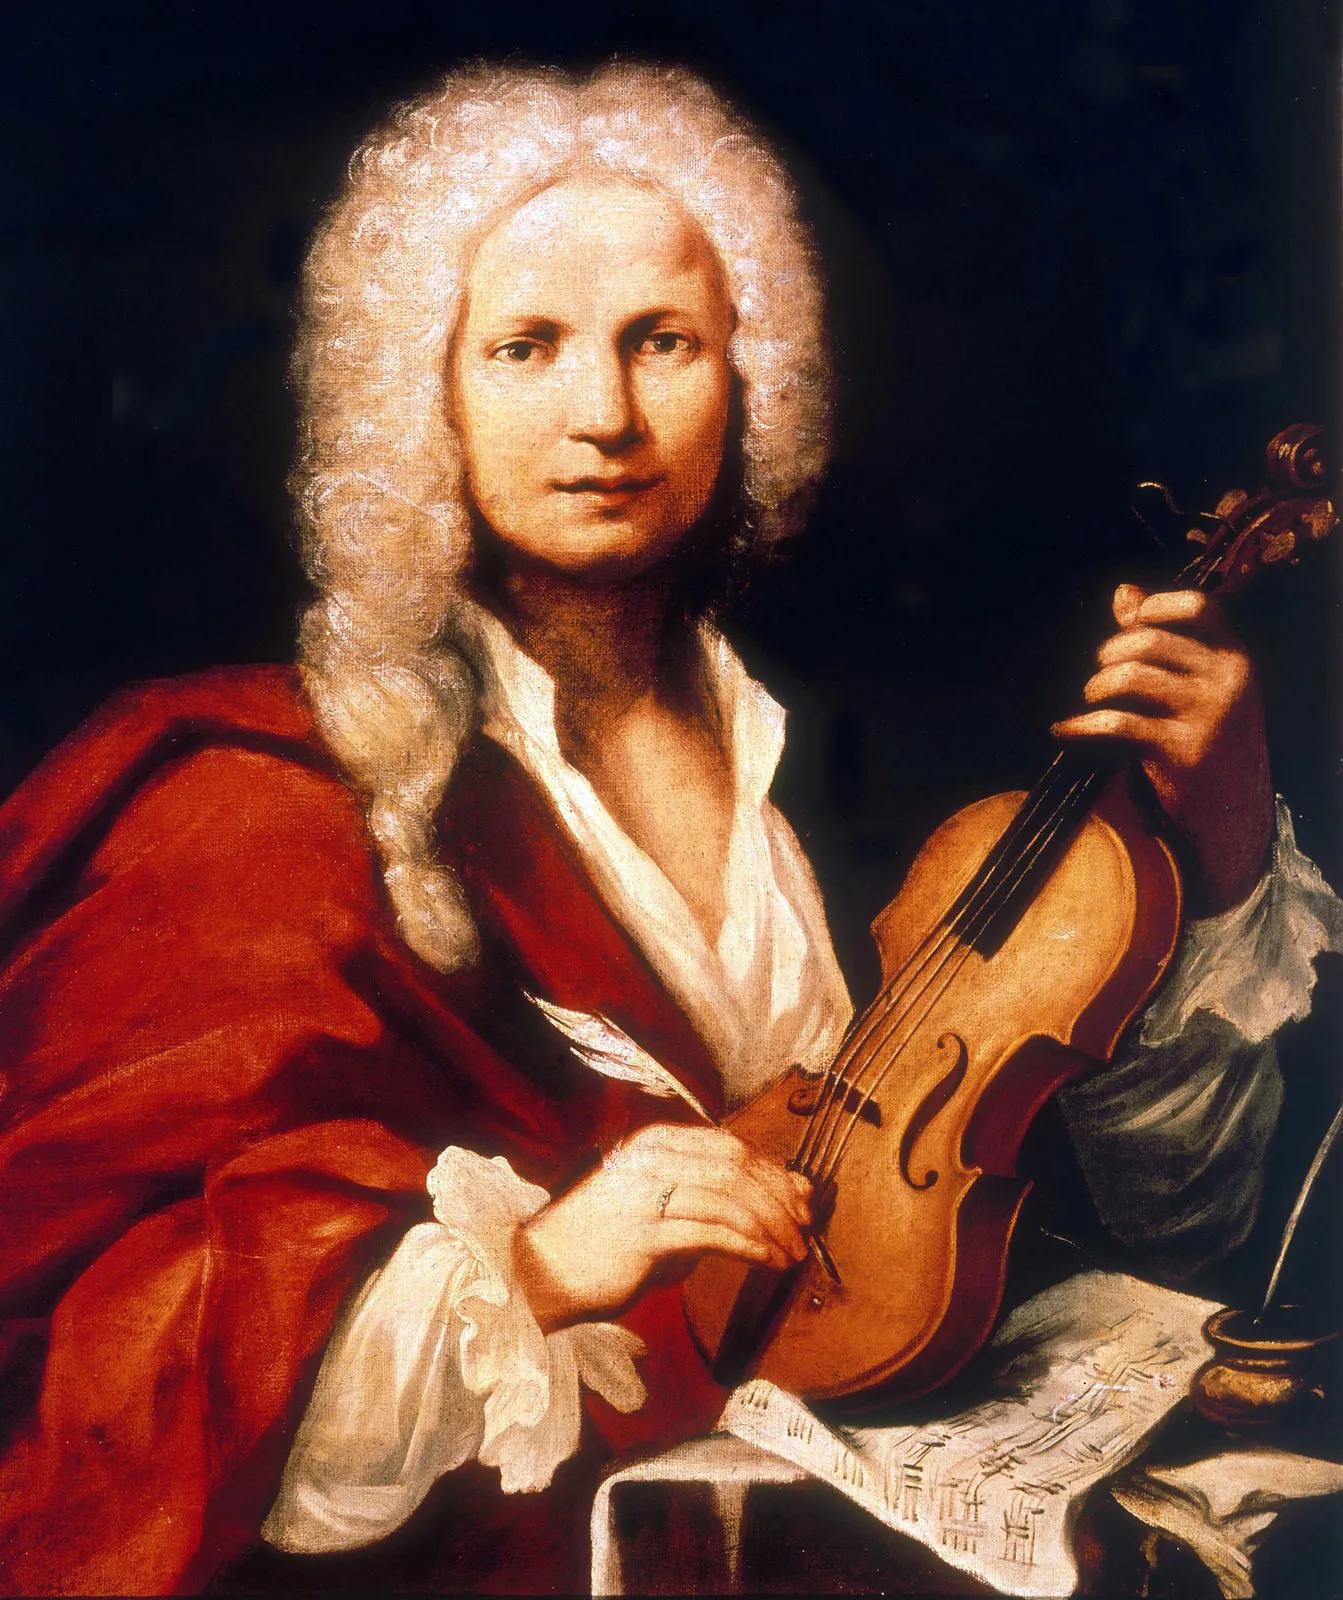 vivaldi concerto for four violins - How many Vivaldi violin concertos are there